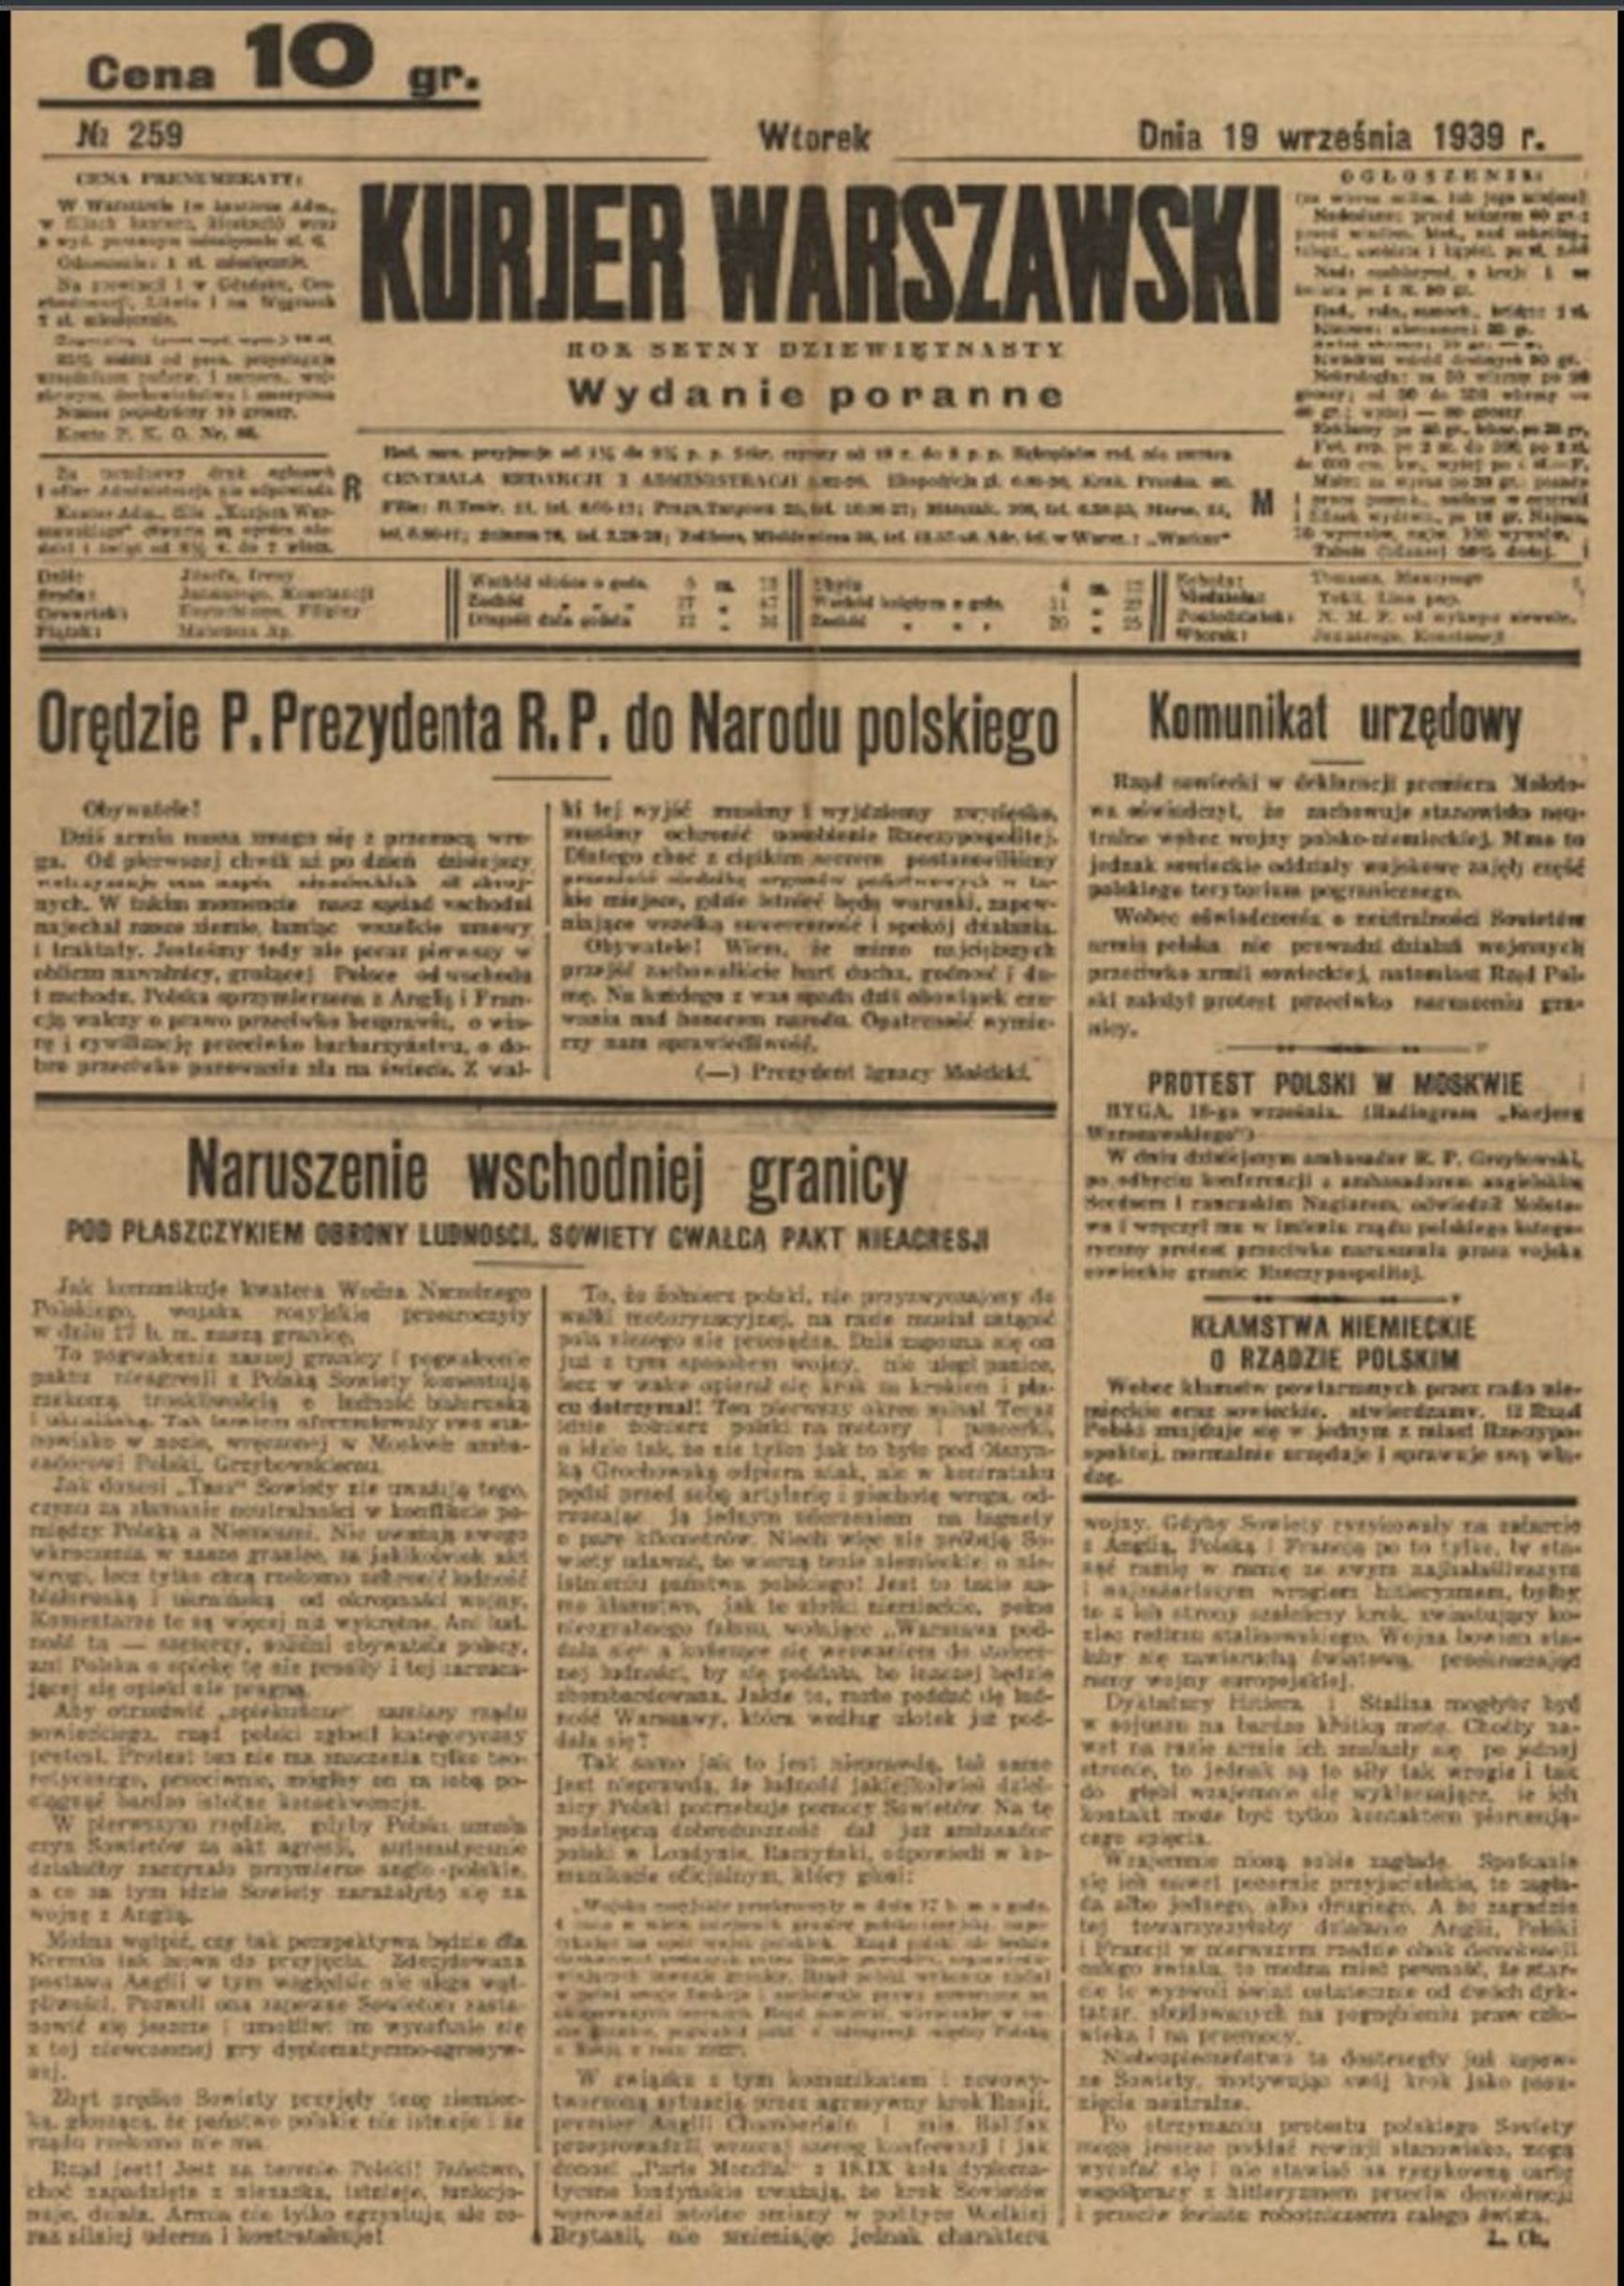 Newspaper Kurjer Warszawski of September 19, 1939